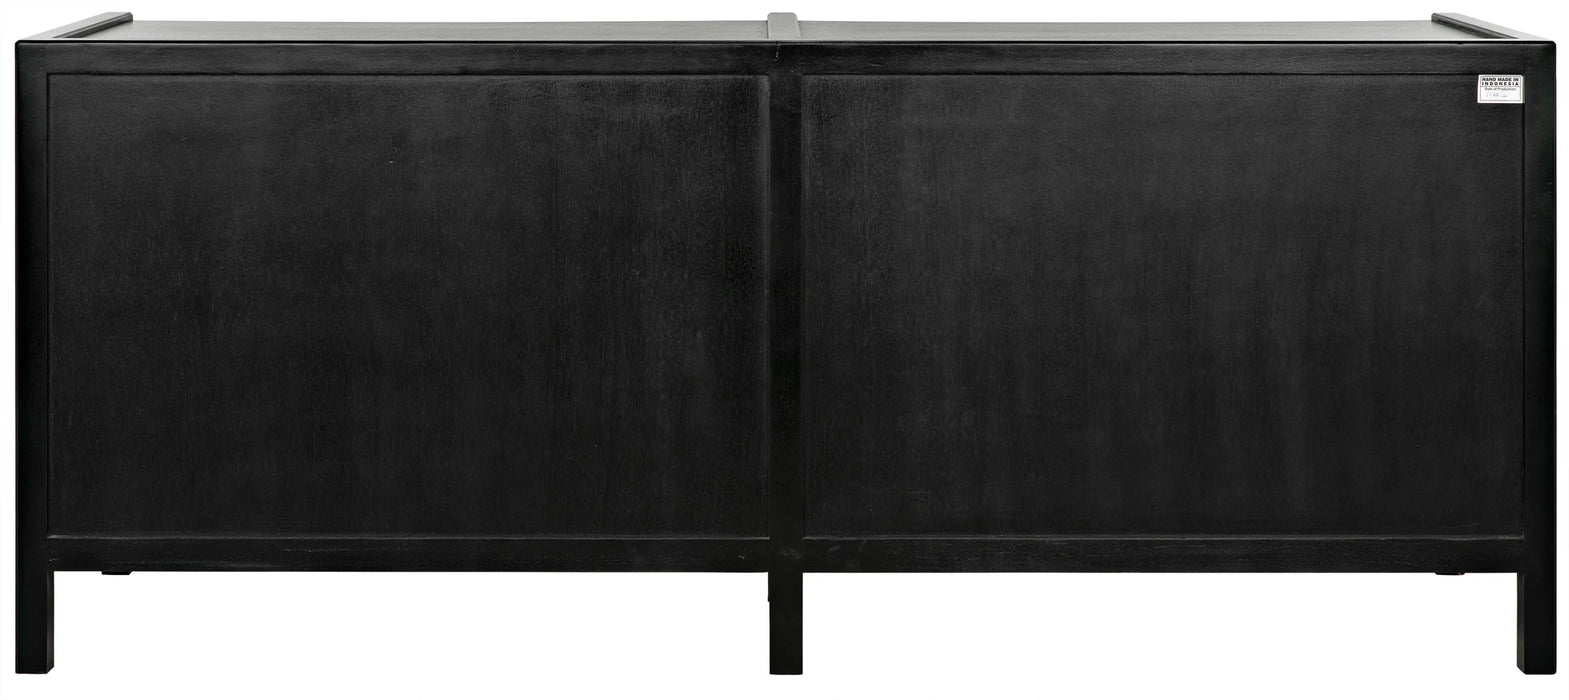 NOIR Furniture - Hampton 6 Drawer Dresser, Hand Rubbed Black - GDRE241HB-2